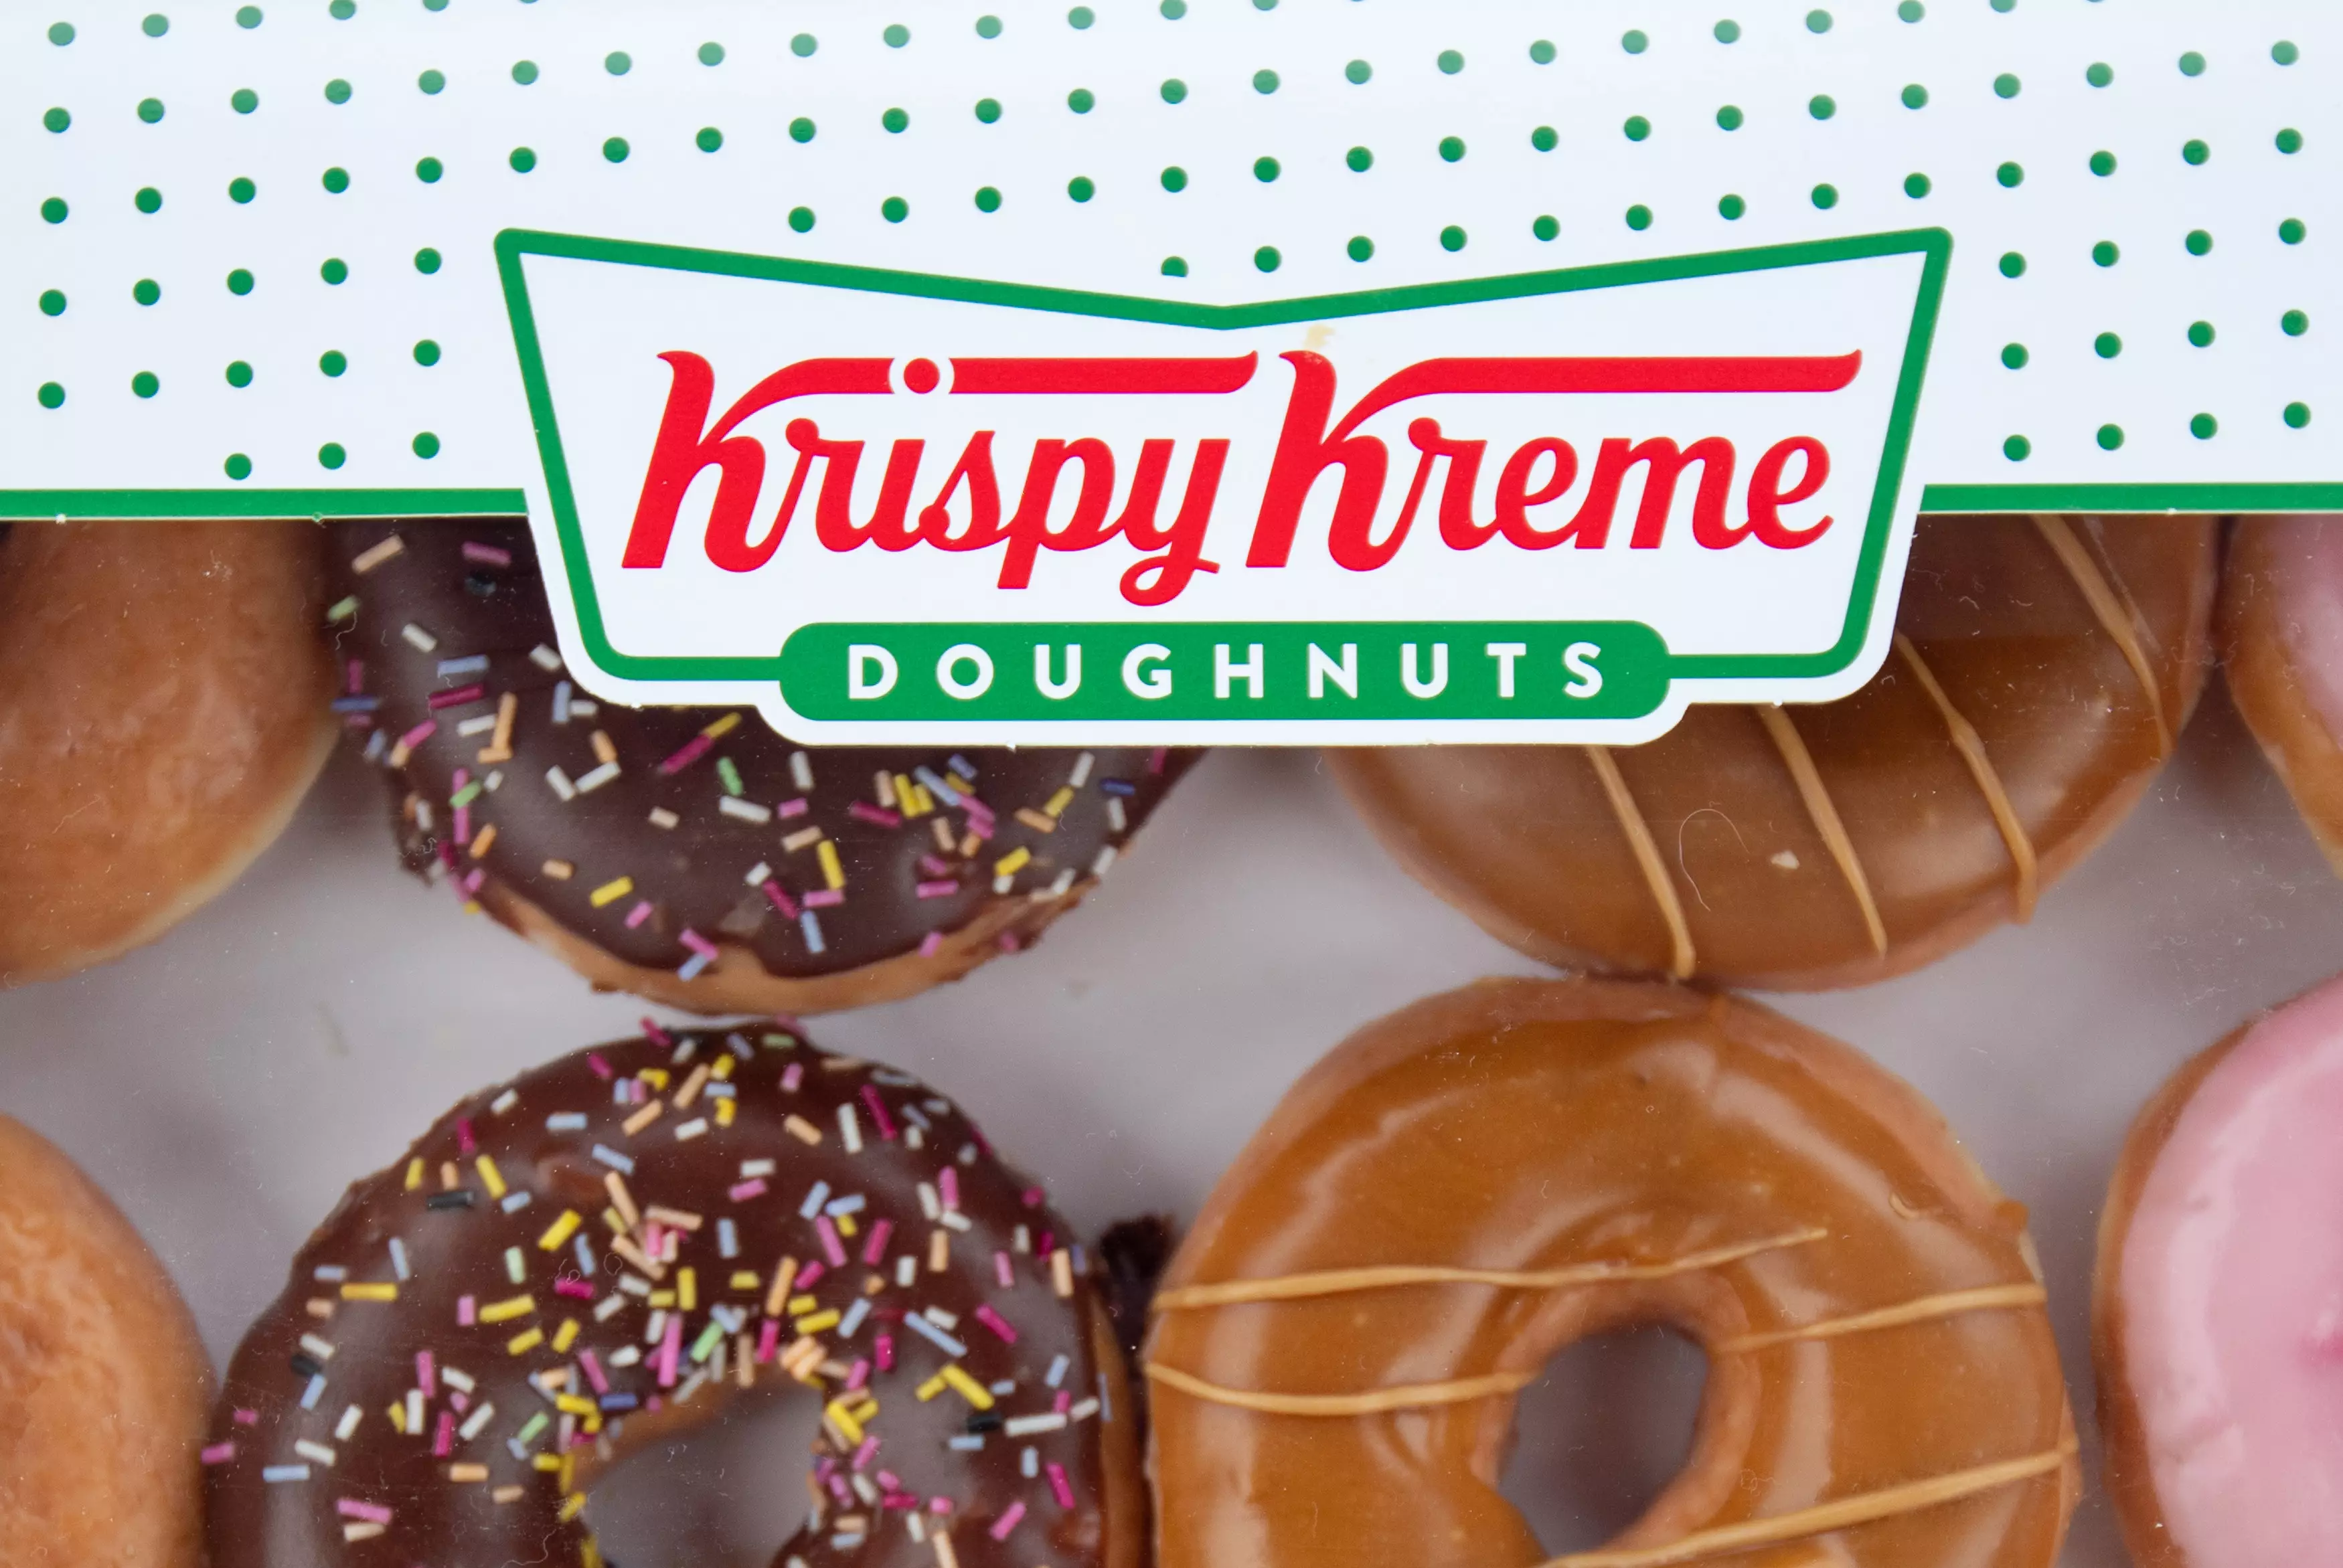 A free doughnut a day across the USA.